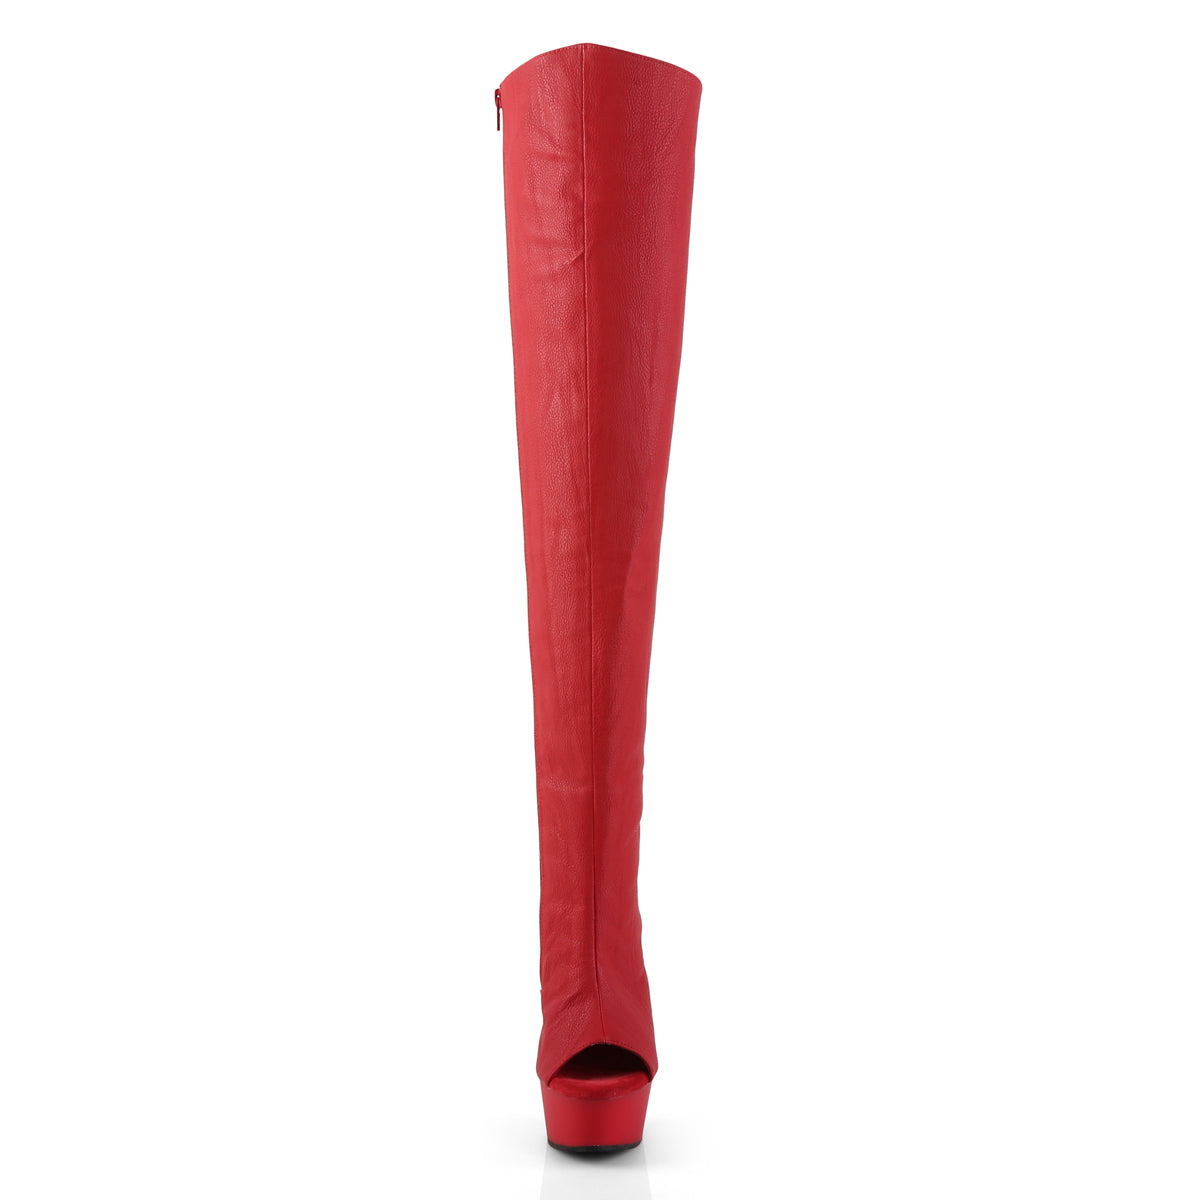 DELIGHT-3019 Pleaser 6 Inch Heel Red Pole Dancing Platforms-Pleaser- Sexy Shoes Alternative Footwear